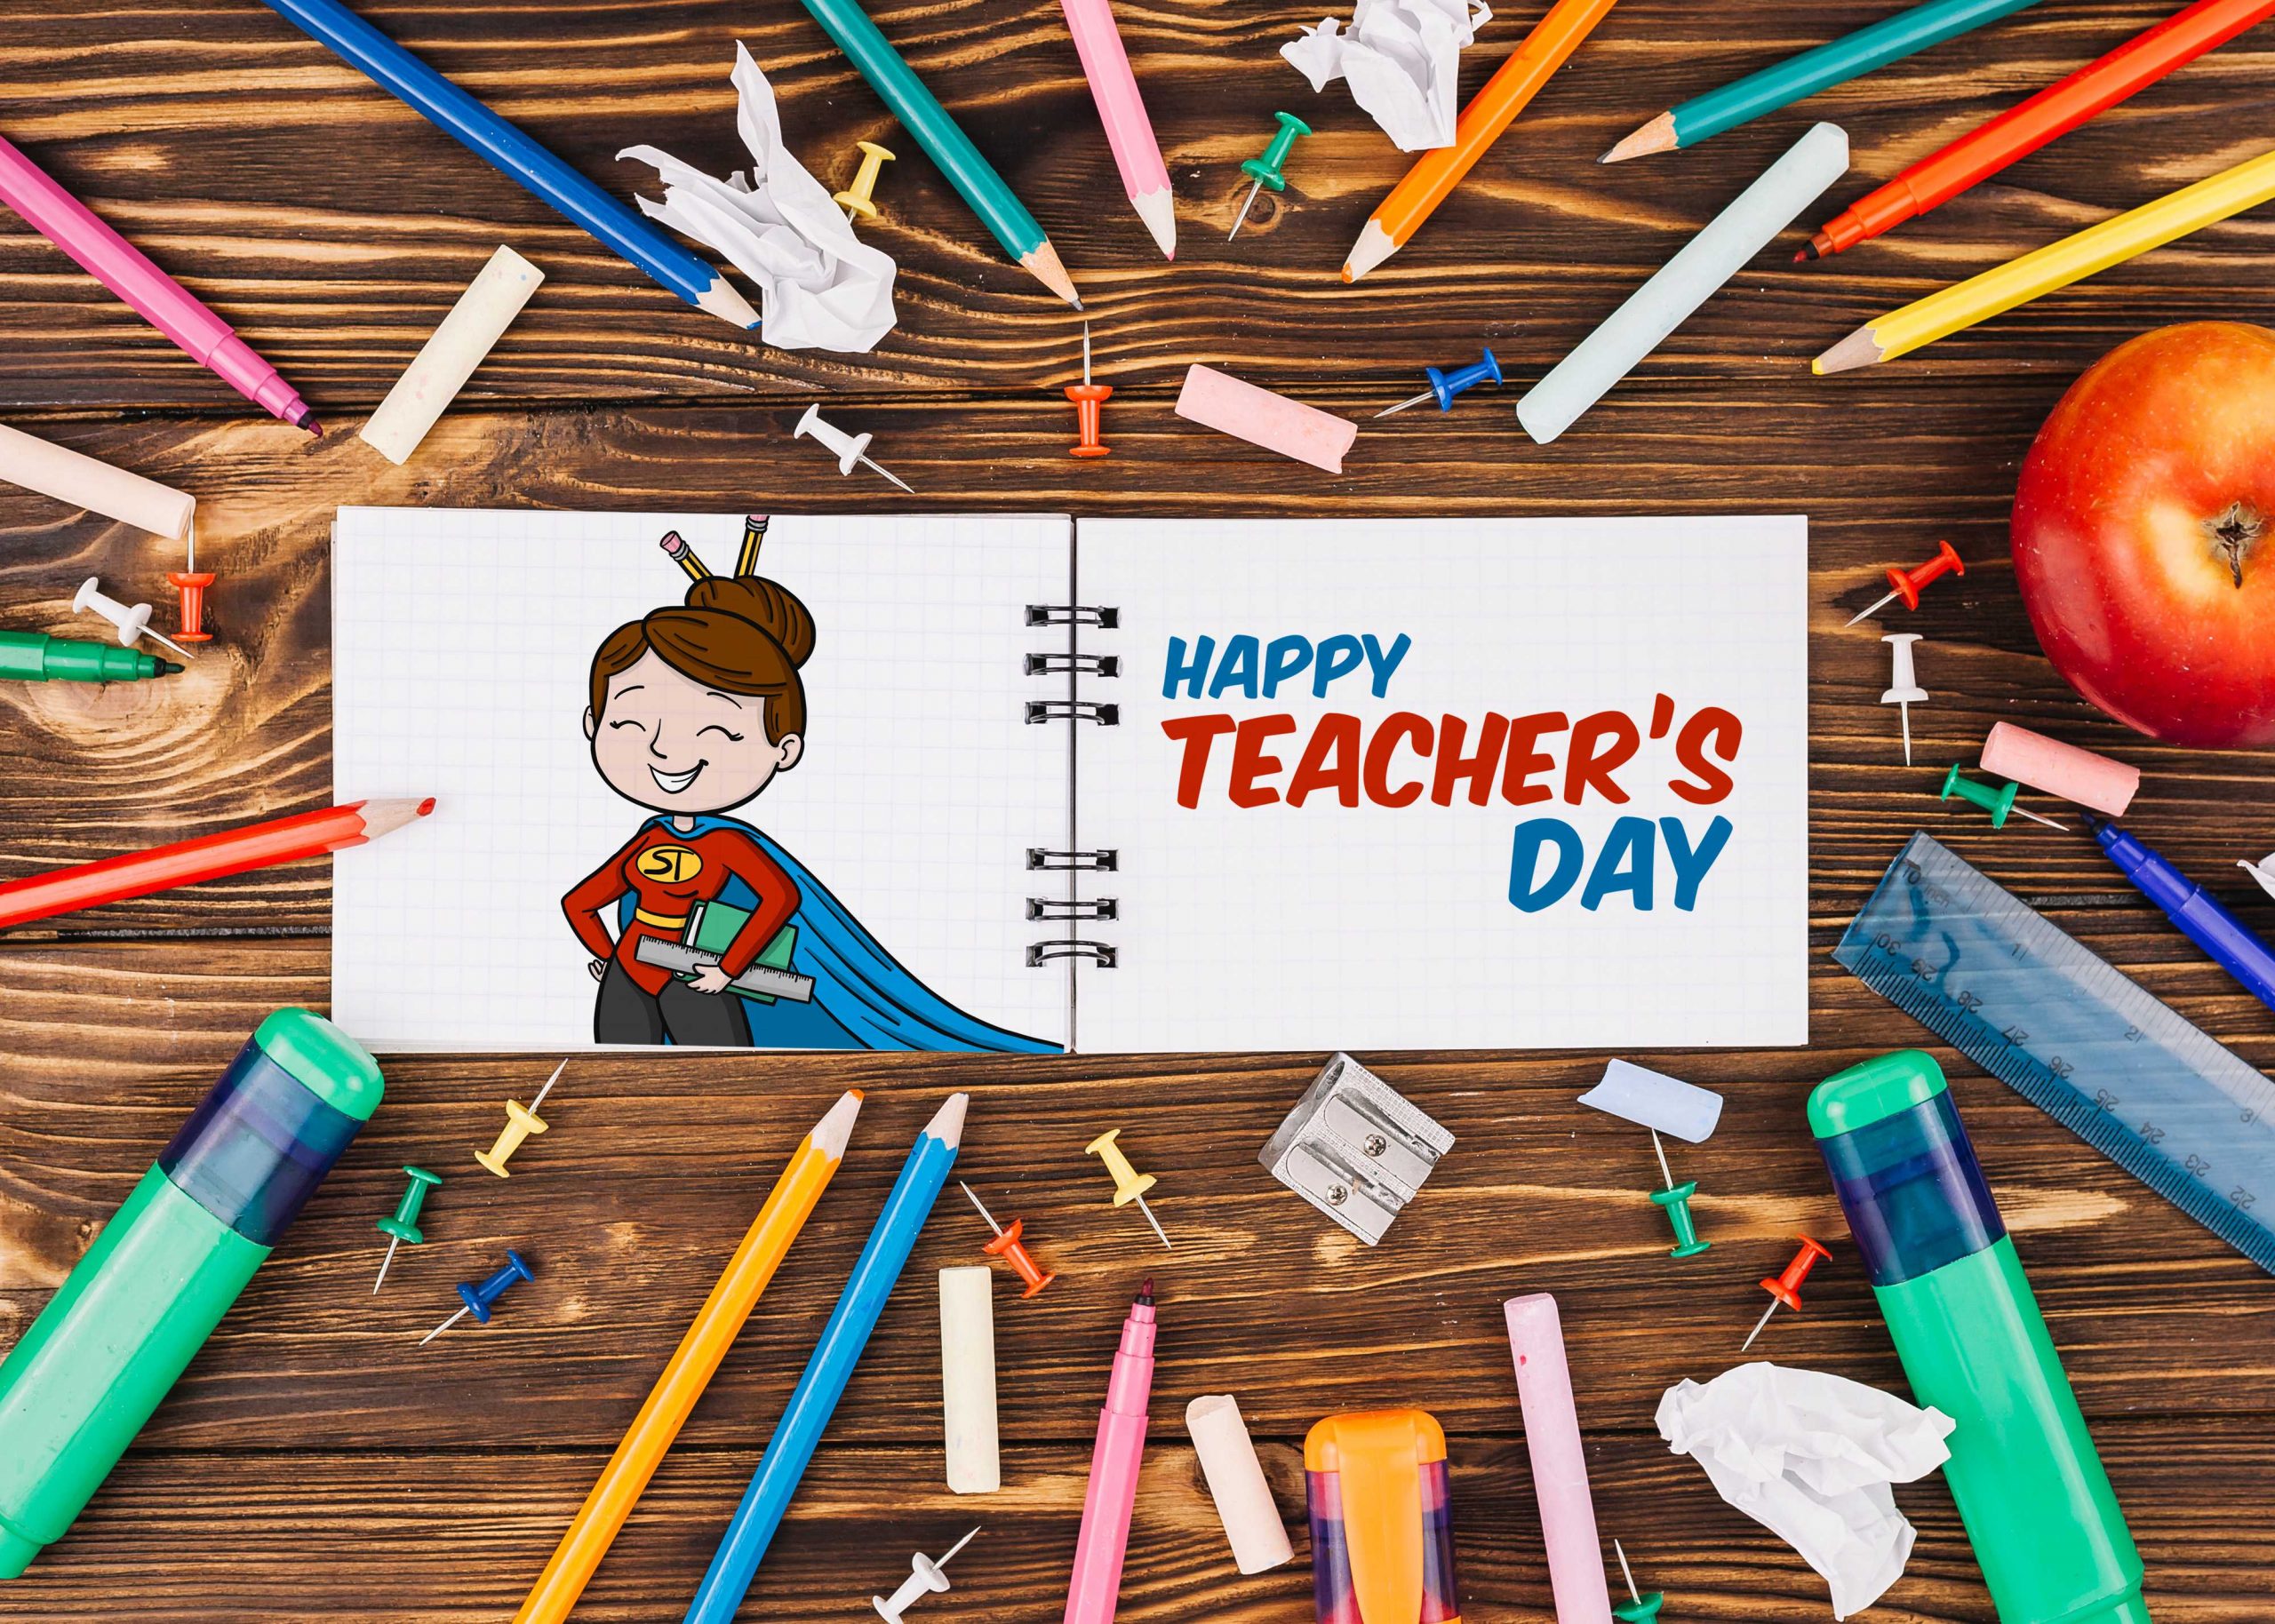 Happy Teacher's Day image download